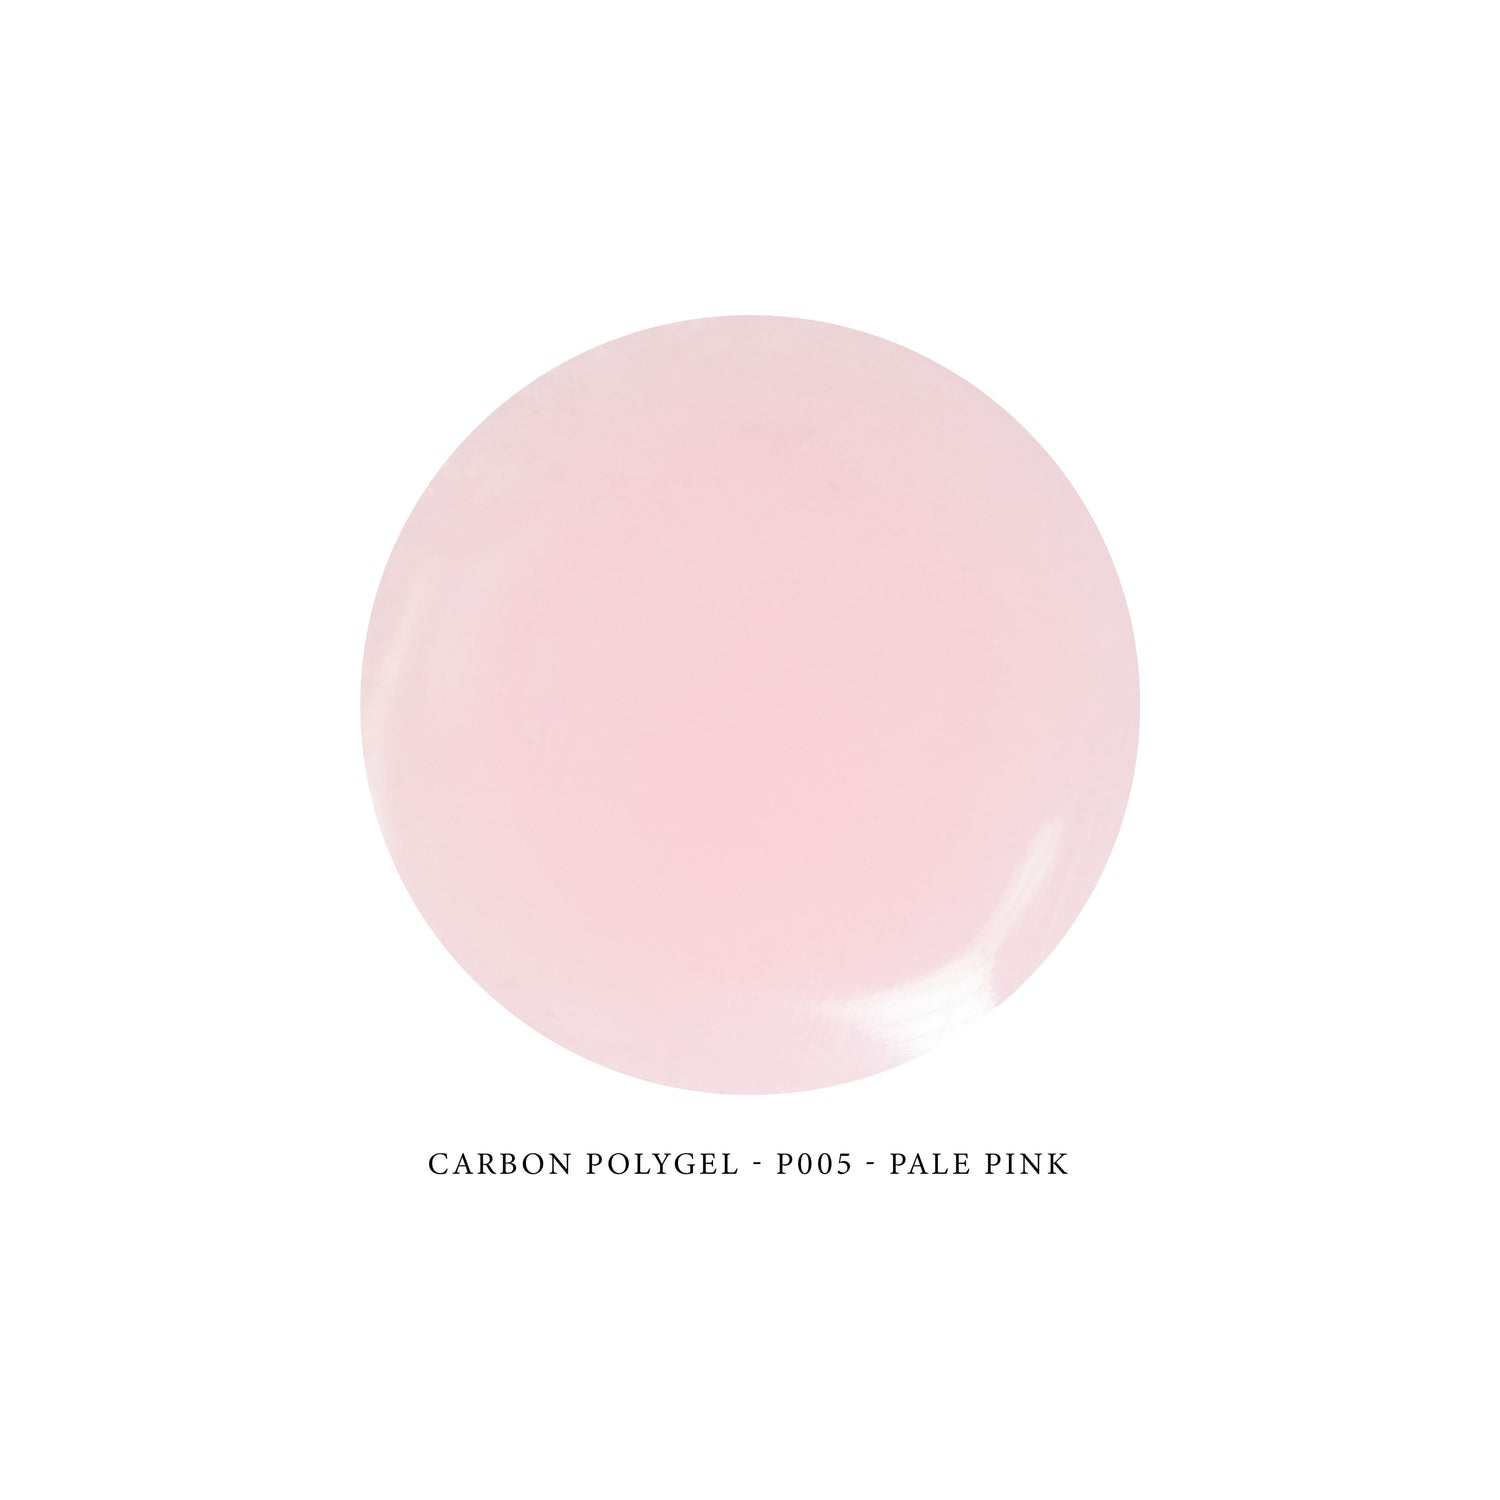 Carbon Polygel P005 - PALE PINK 30g